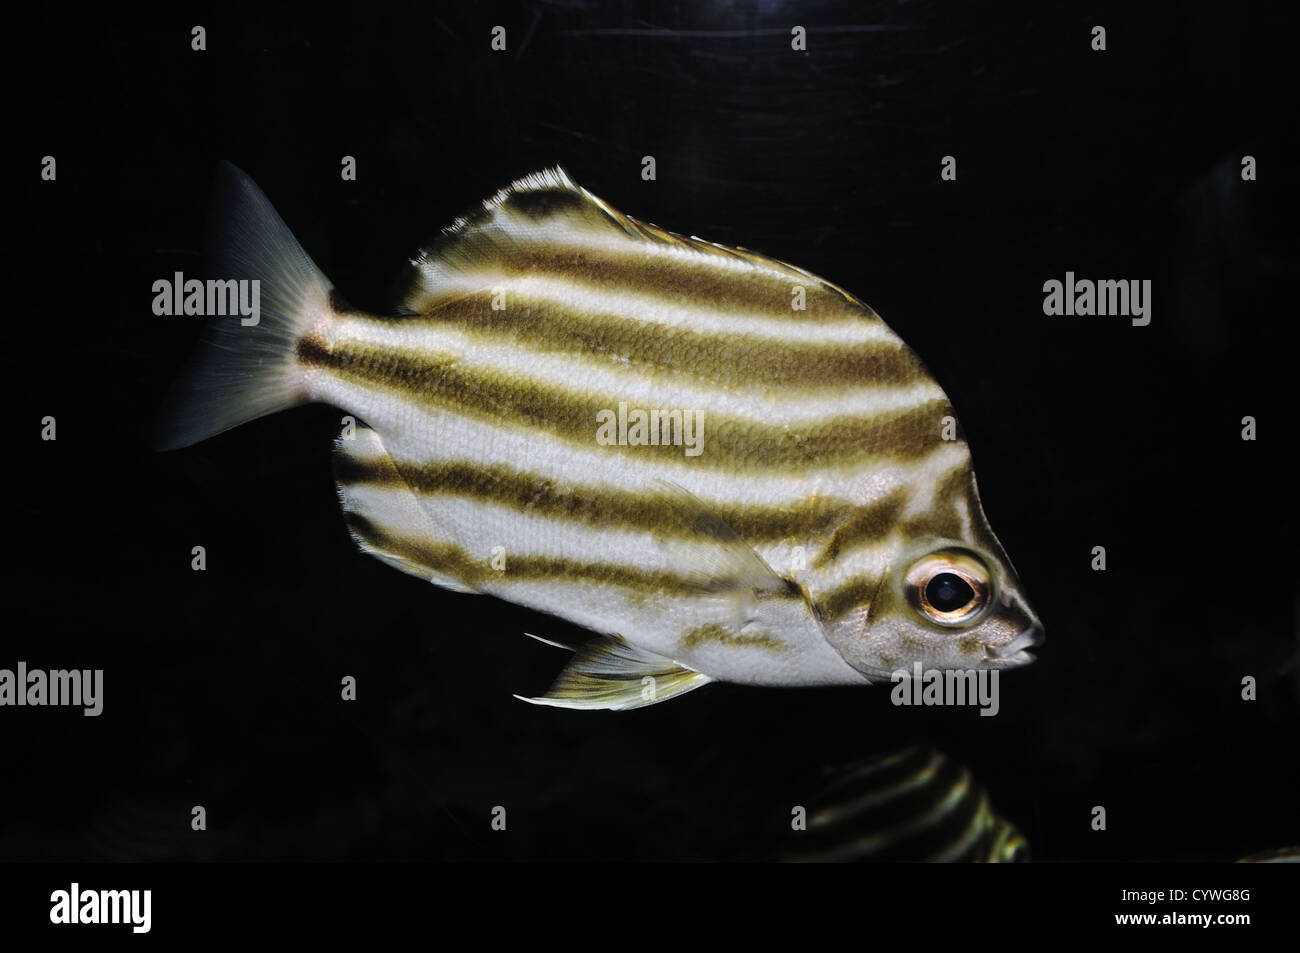 Australian Stripey Fish Against Black Background Stock Photo